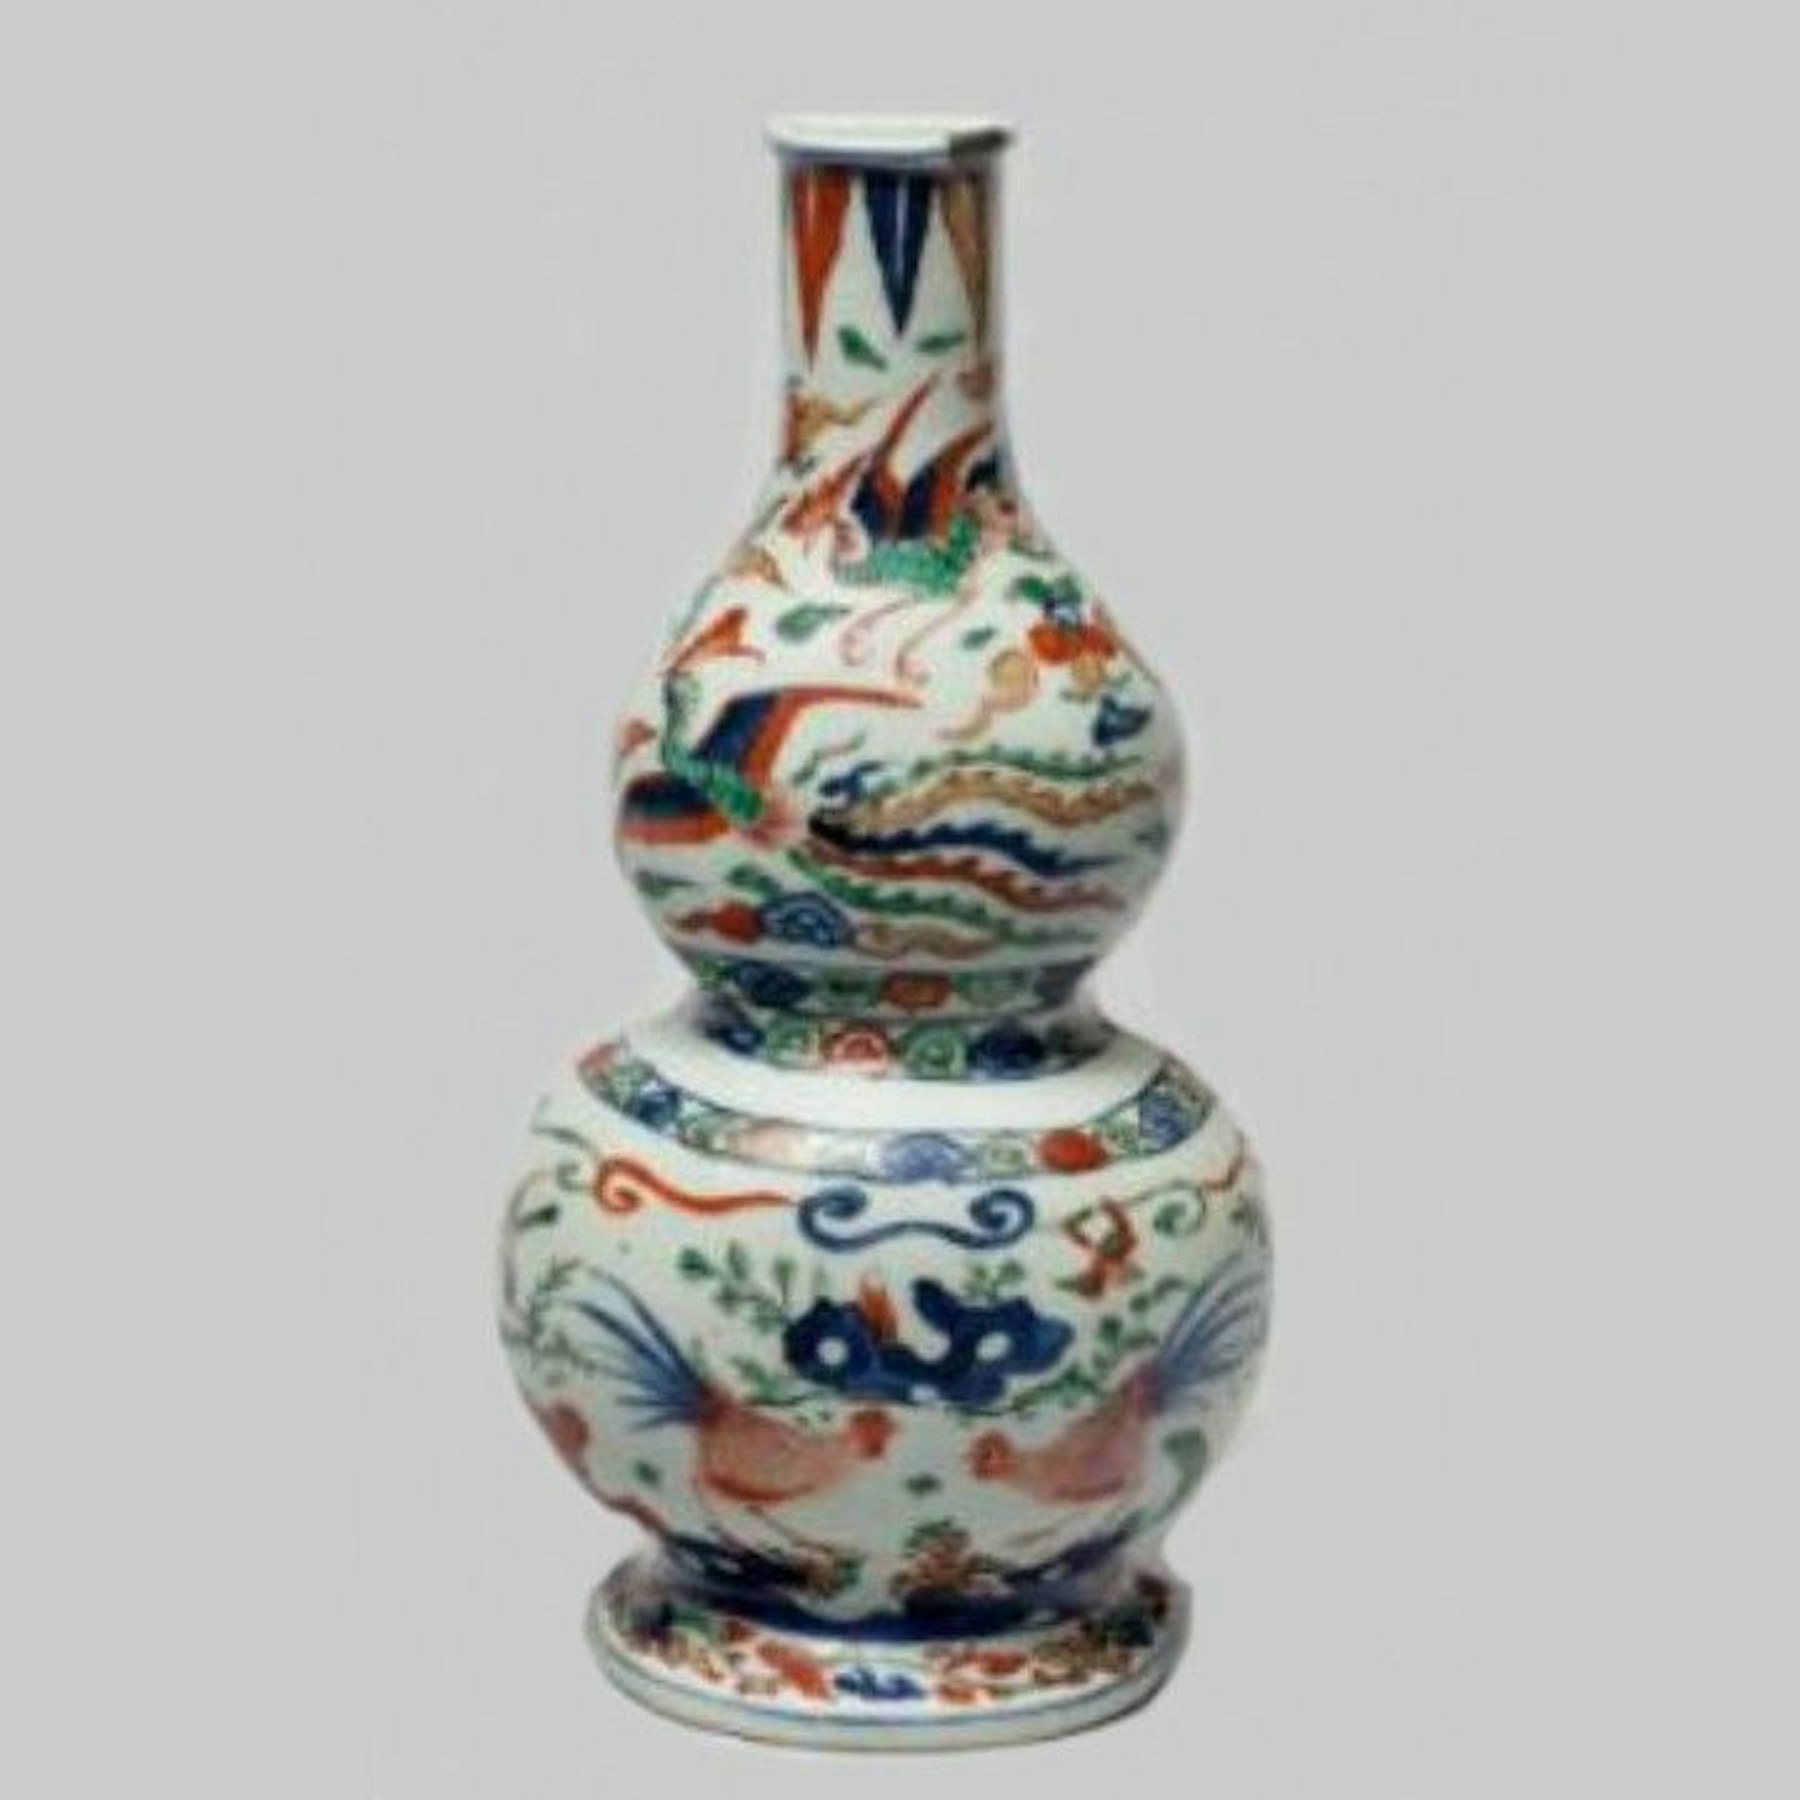 Wucai-Wandvase ///Material: Porzellan, Jingdezhen, Unterglasurblau, Email///Herkunft: China, Ming-Dynastie, Wanli-Marke (1572-1620)///Maße: Höhe 30 cm